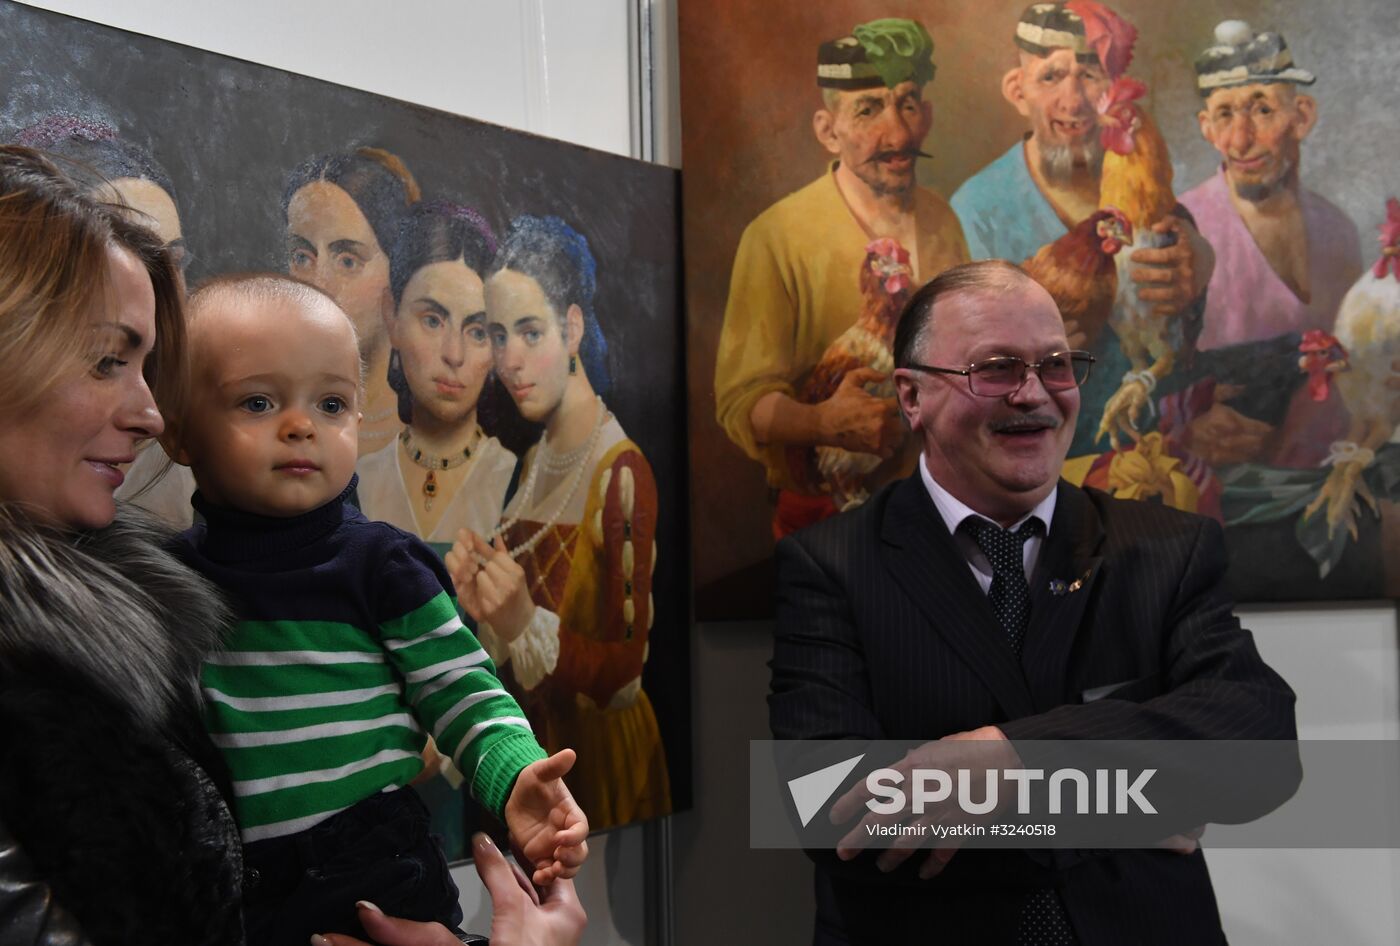 Opening of Russian Art Week International Exhibition of Modern Art